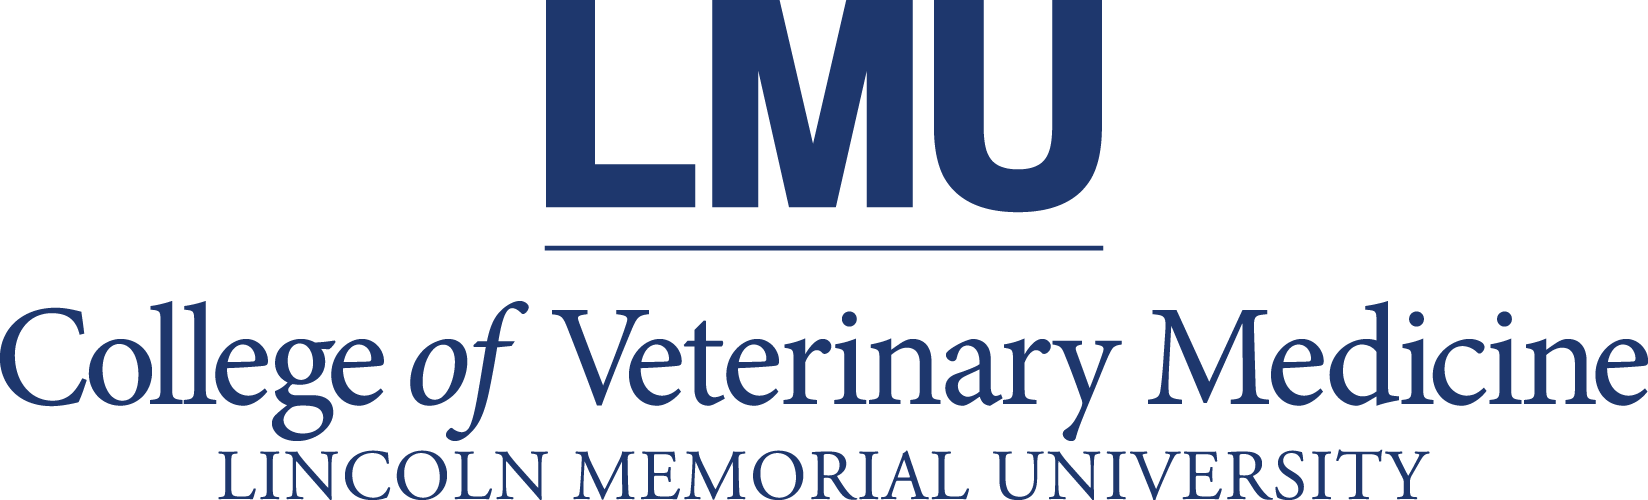 Lincoln Memorial University College of Veterinary Medicine Donor Site